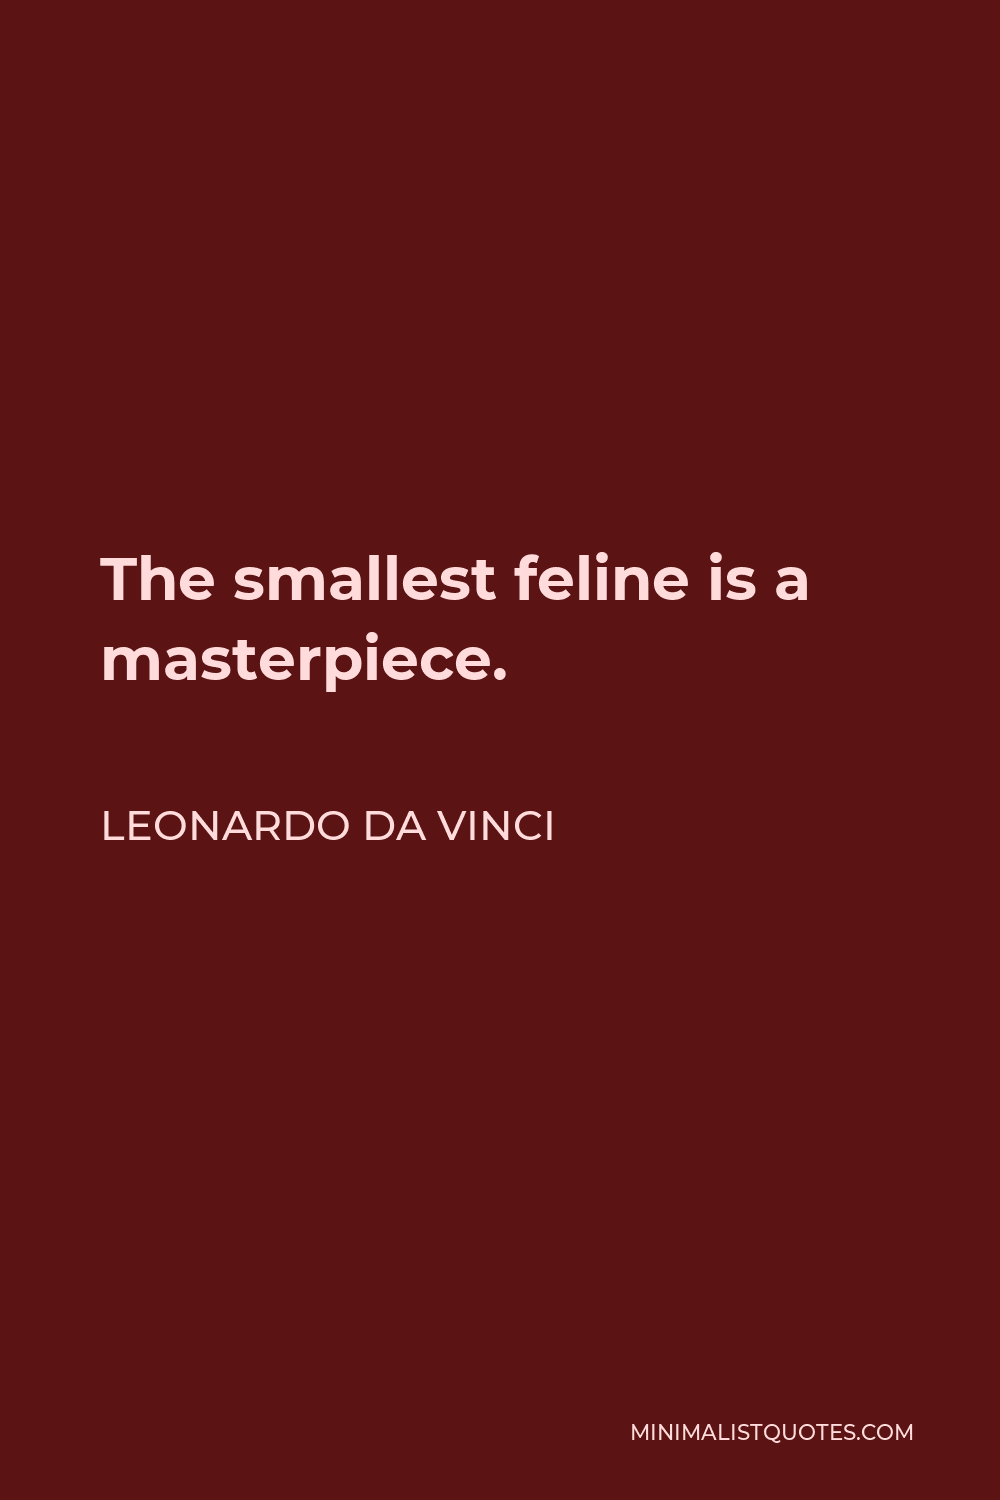 Leonardo da Vinci Quote - The smallest feline is a masterpiece.